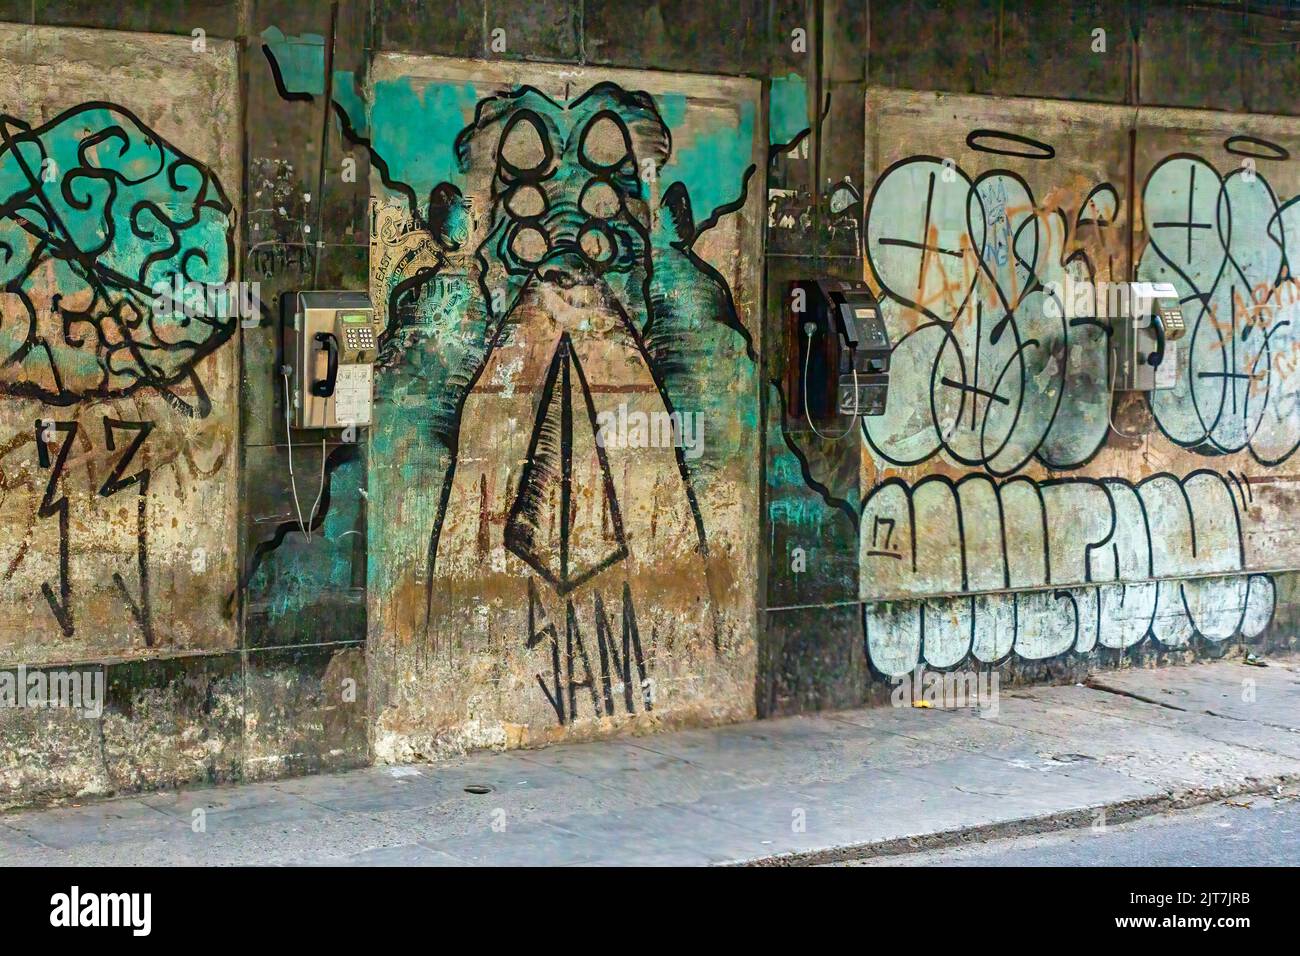 Urban graffiti in a city dirty wall Stock Photo